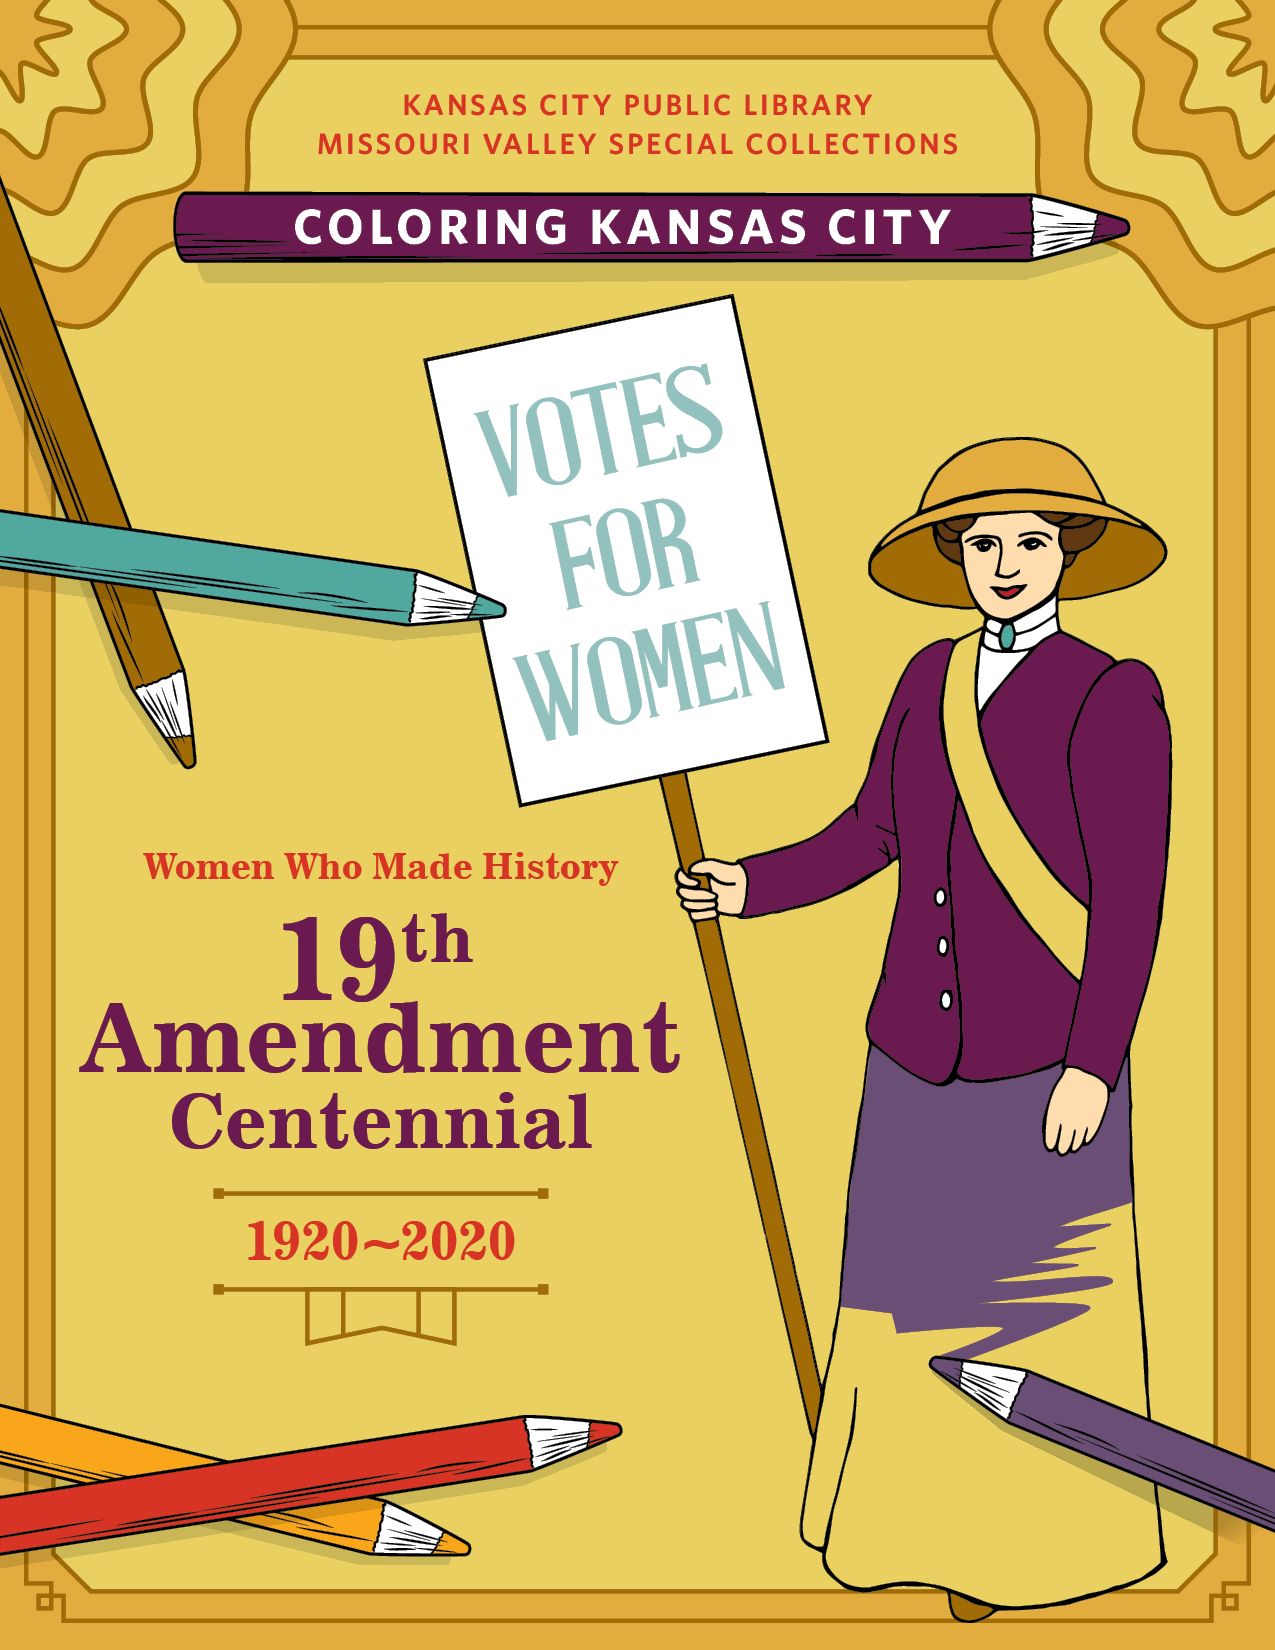 19th Amendment Centennial coloring book cover art